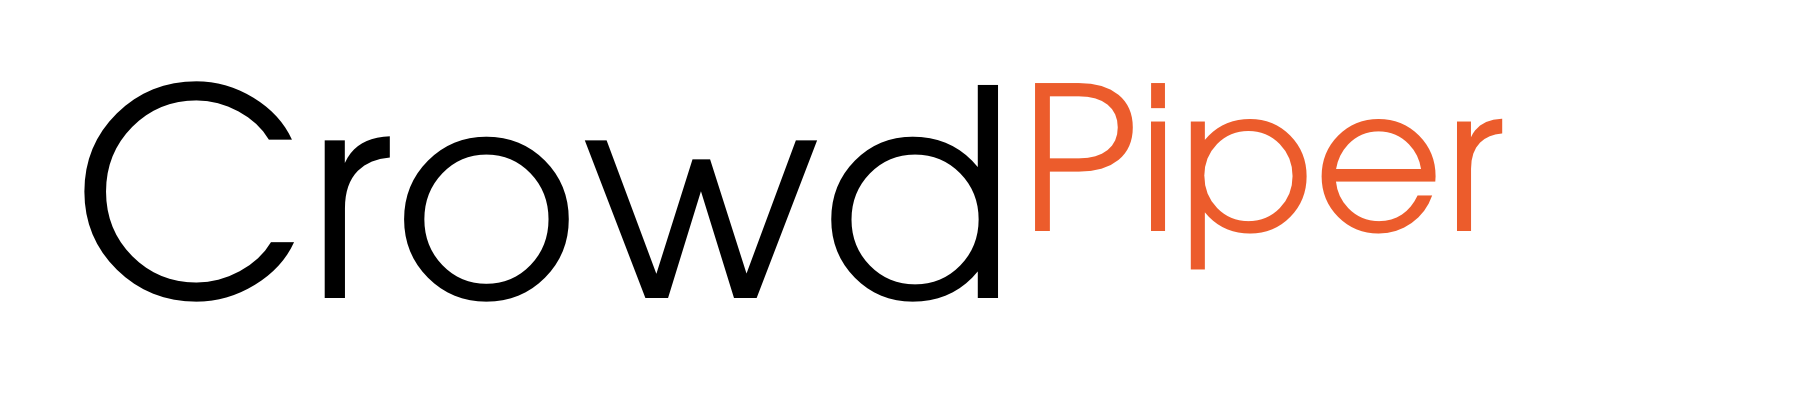 CrowdPiper Logo 2 transparent (1)